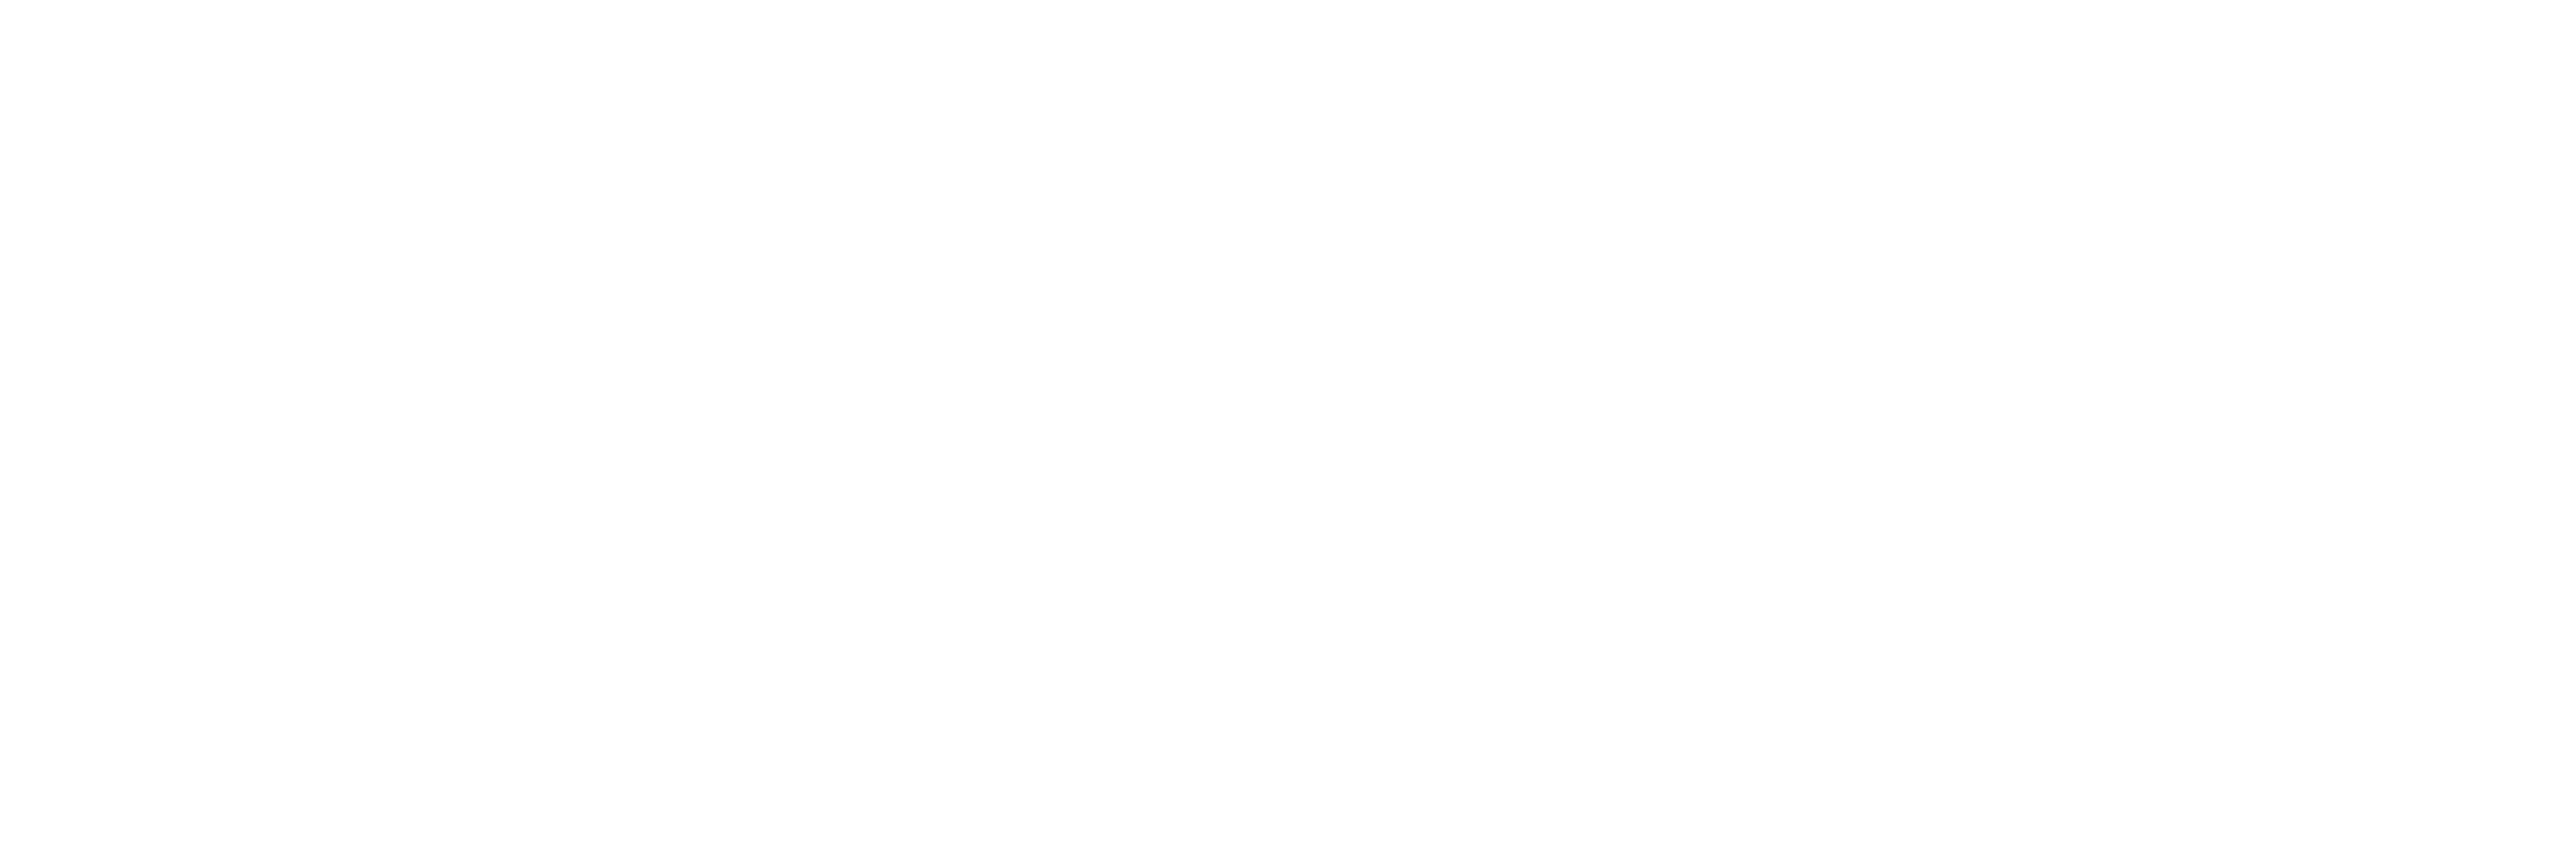 Superior Fighting Championship